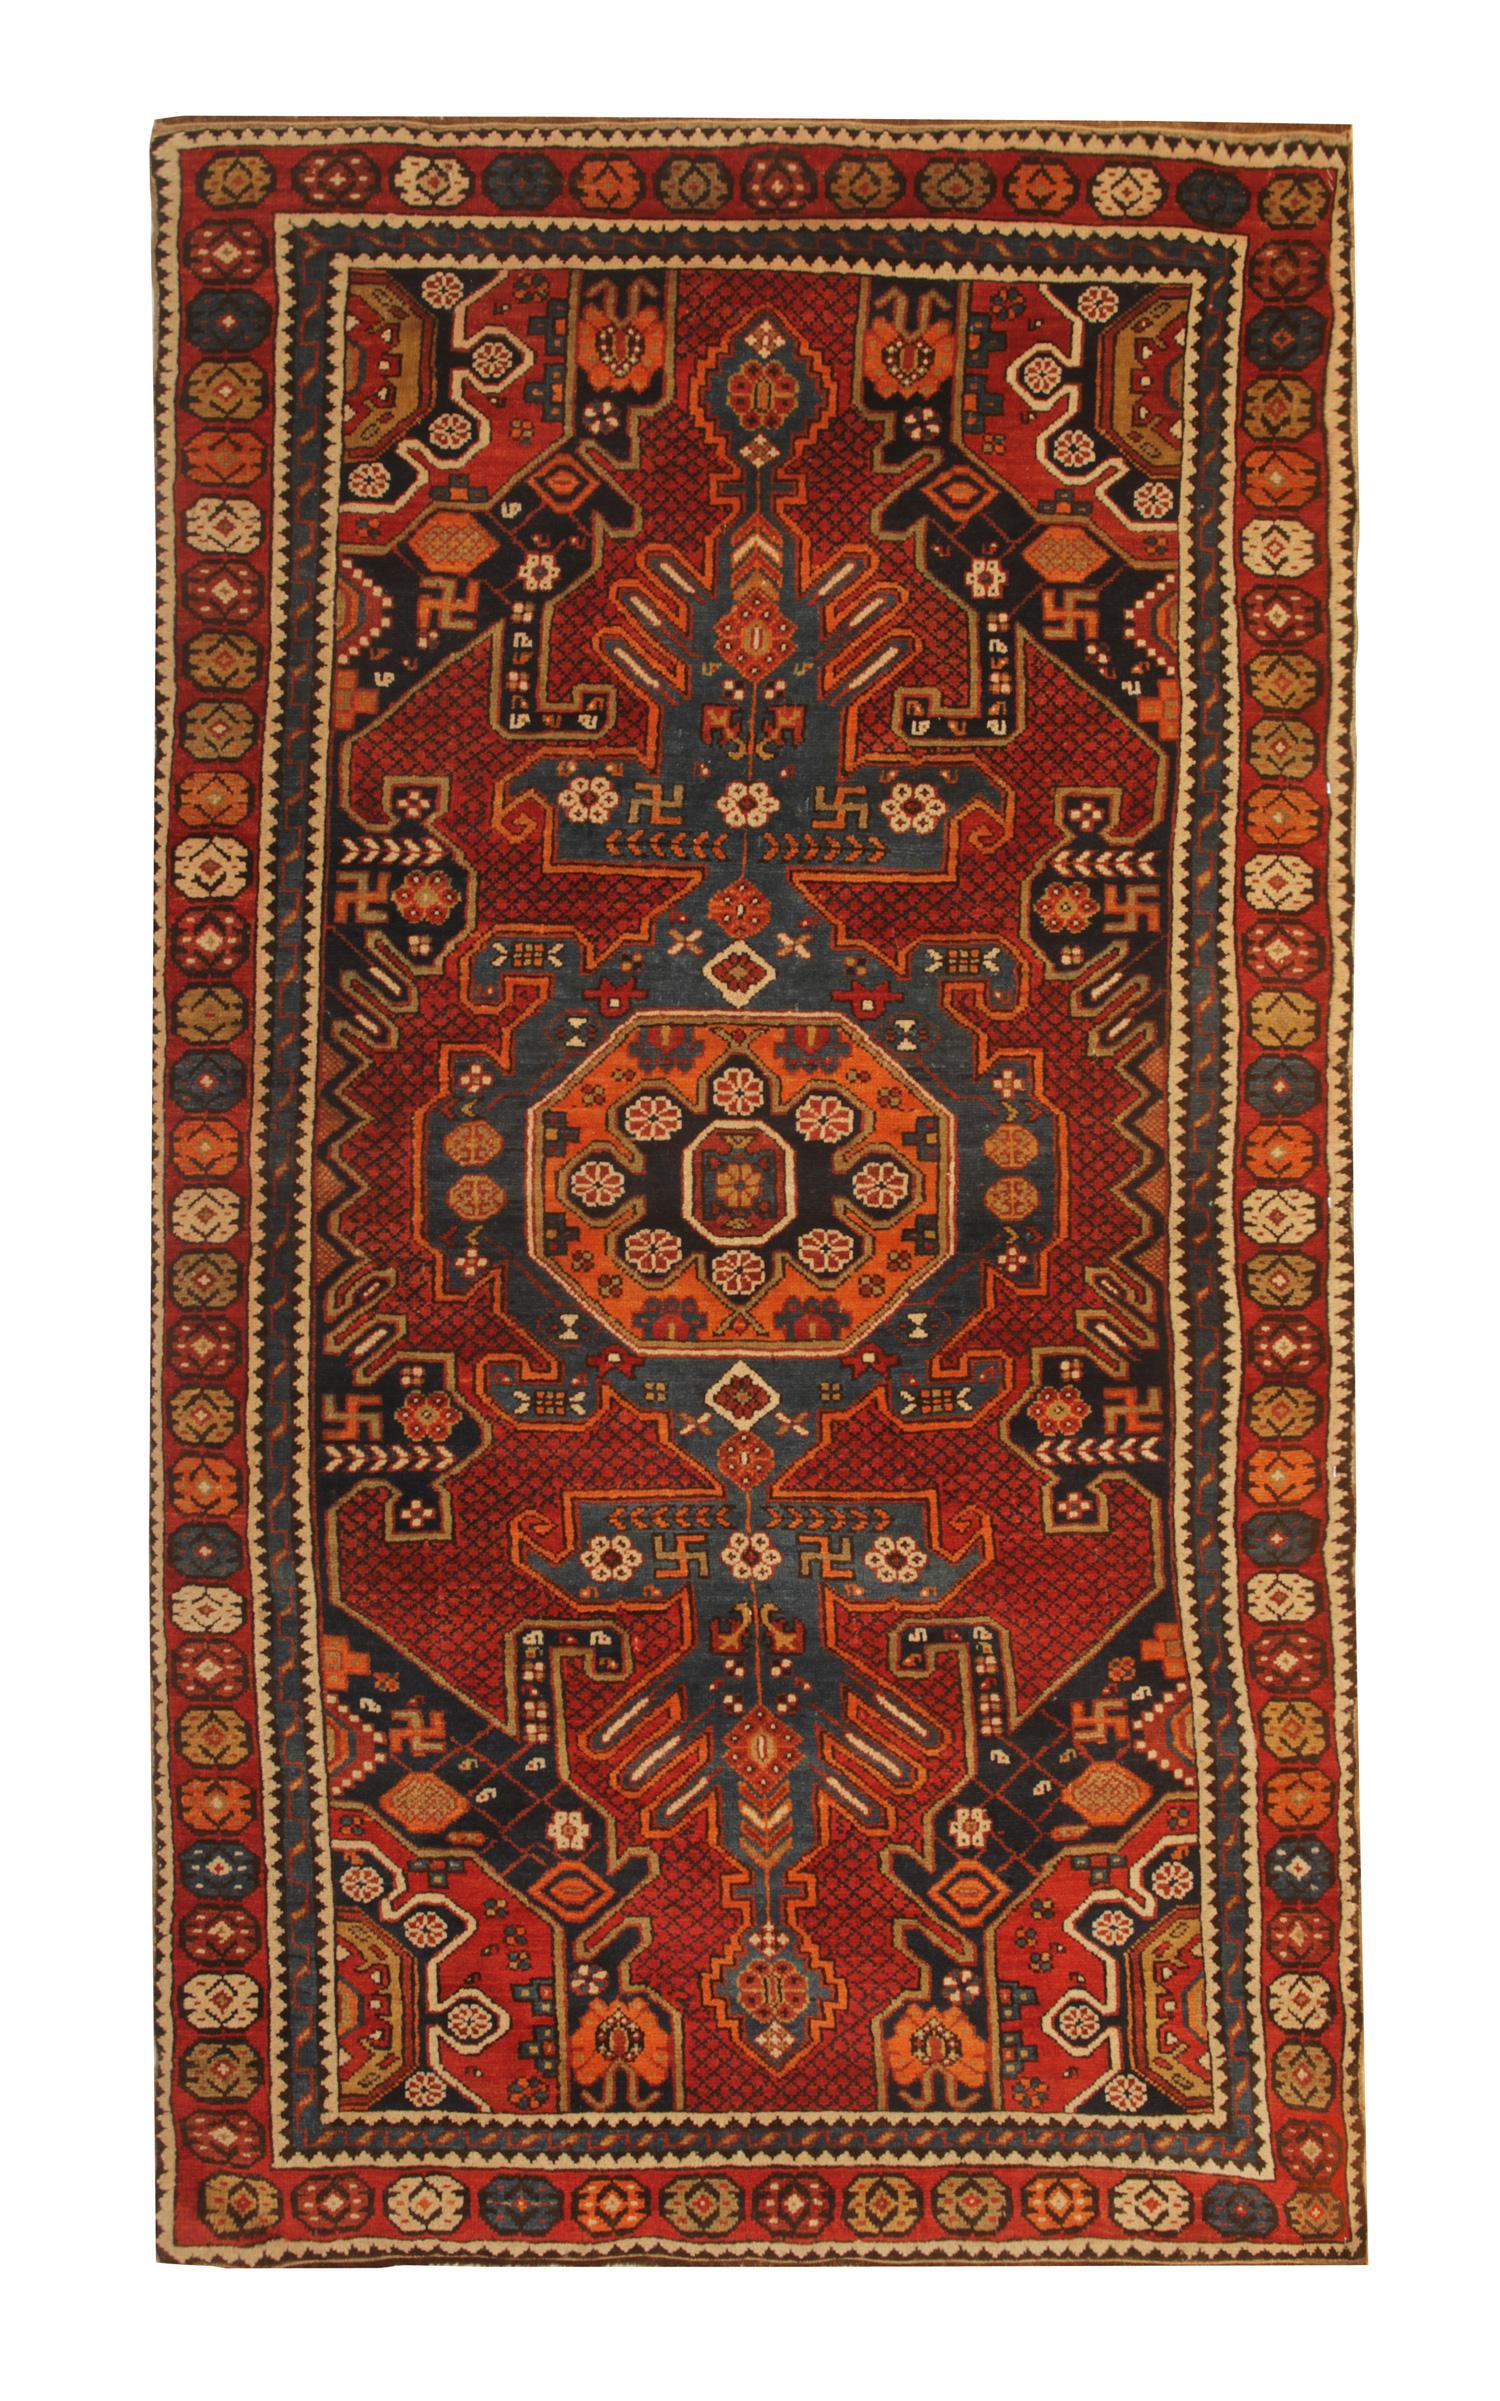 Rare Antique Rug Kazak Caucasian Red Medallion Rug Handmade Carpet of kuba Area For Sale